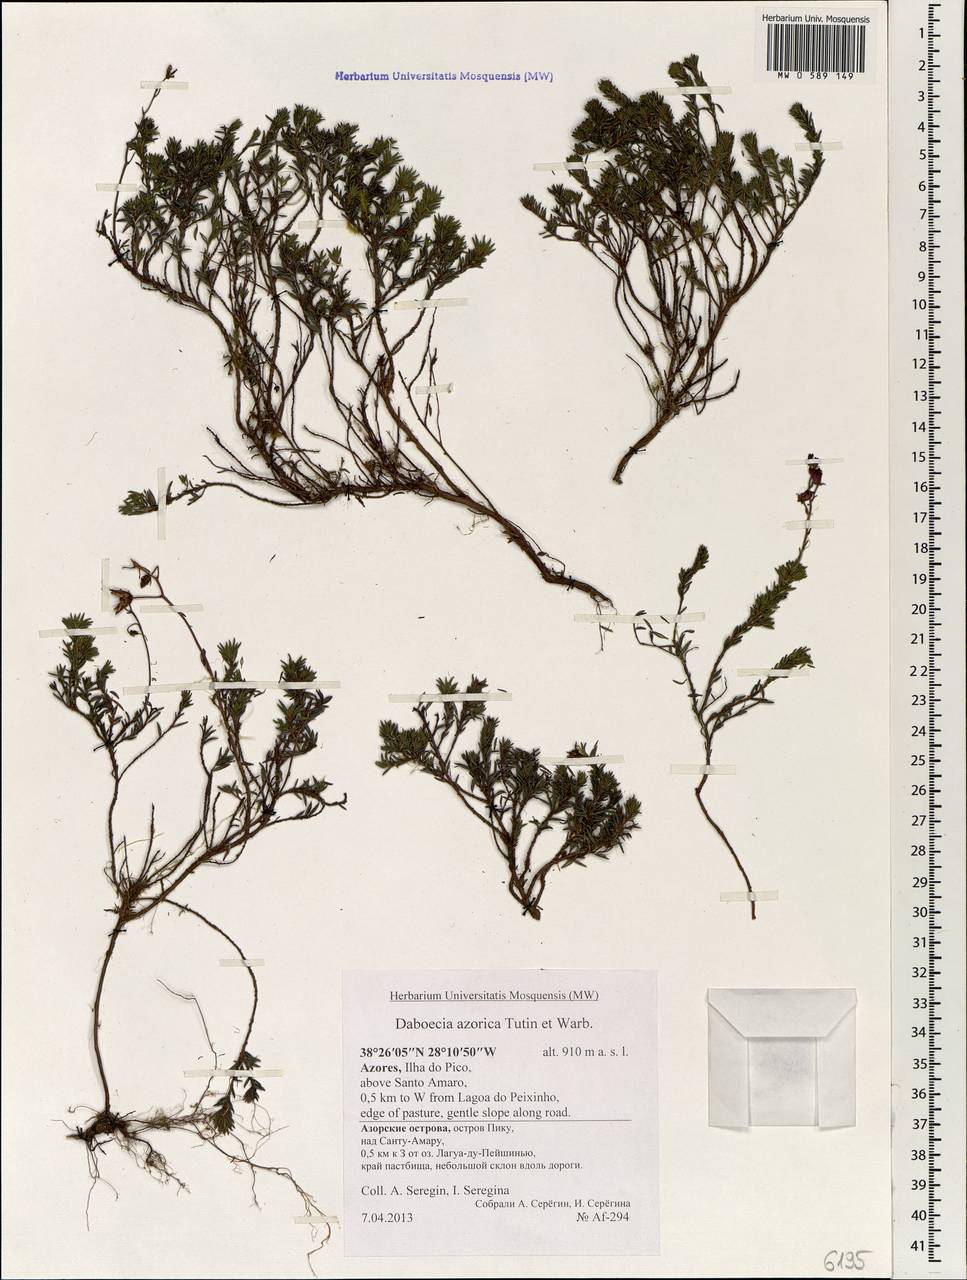 Daboecia cantabrica subsp. azorica (Tutin & E.F. Warburg) D. McClintock, Africa (AFR) (Portugal)